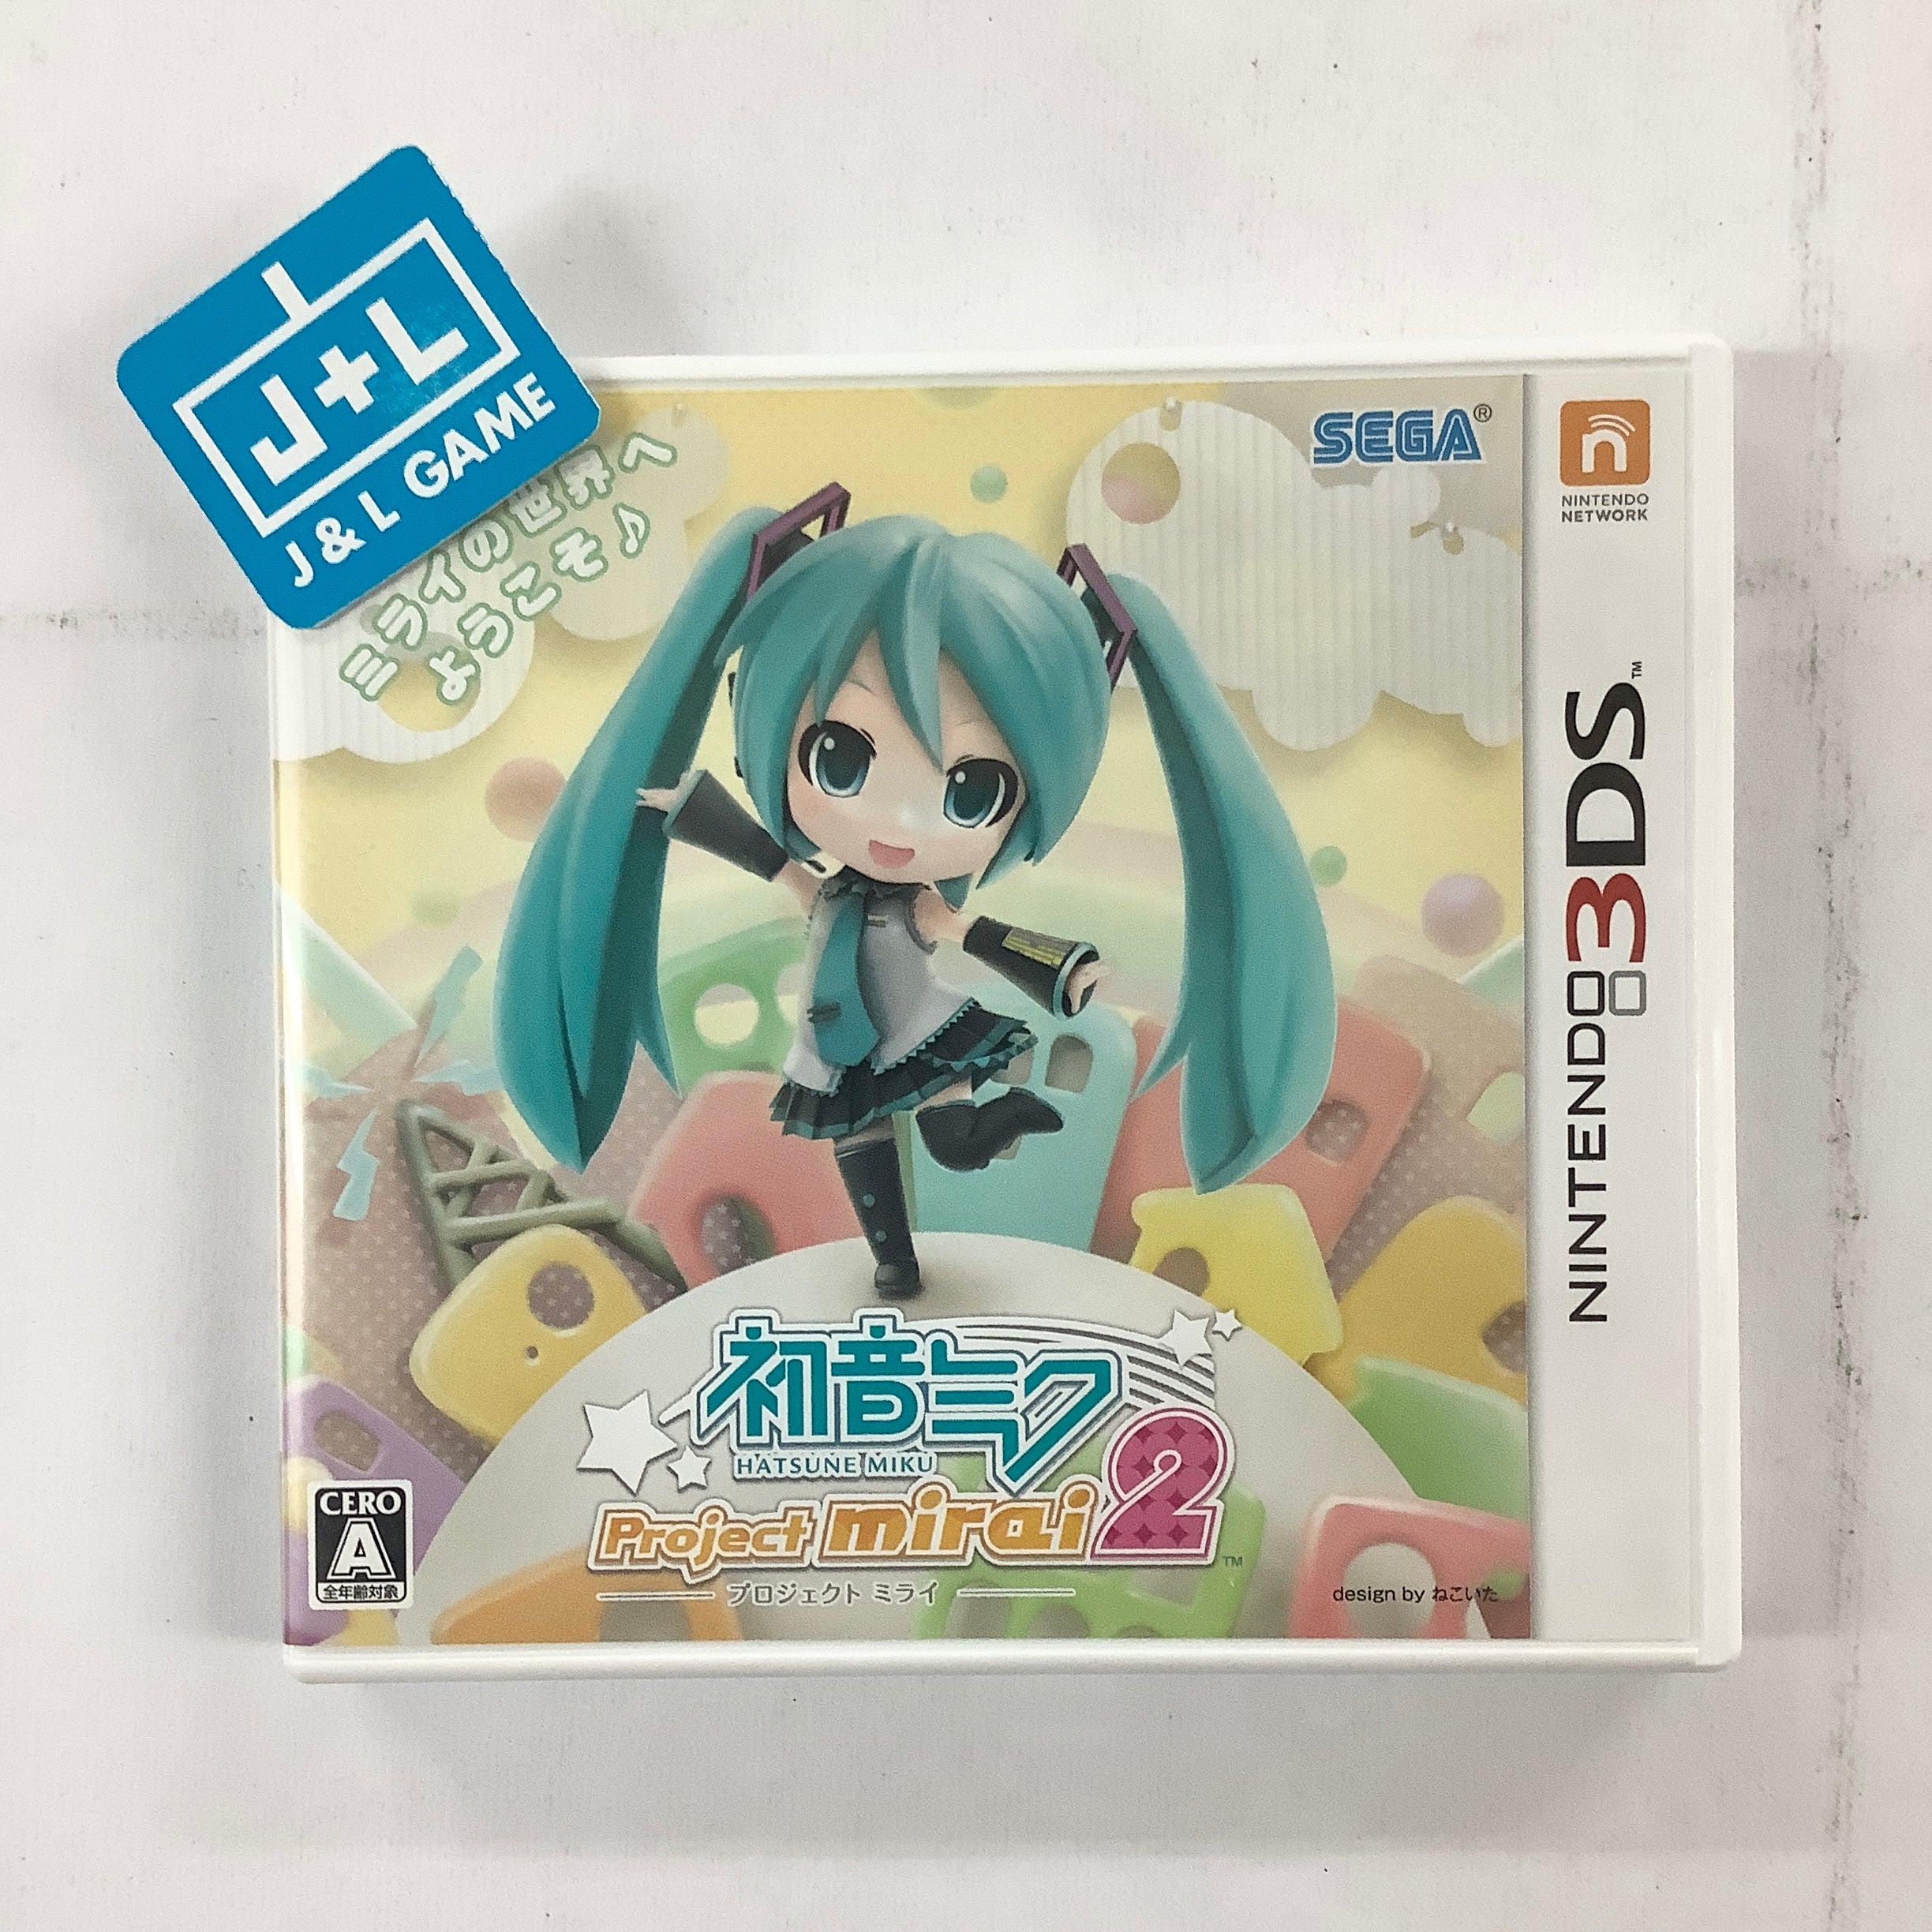 Hatsune Miku: Project Mirai 2 - Nintendo 3DS [Pre-Owned] (Japanese Import) Video Games Sega   